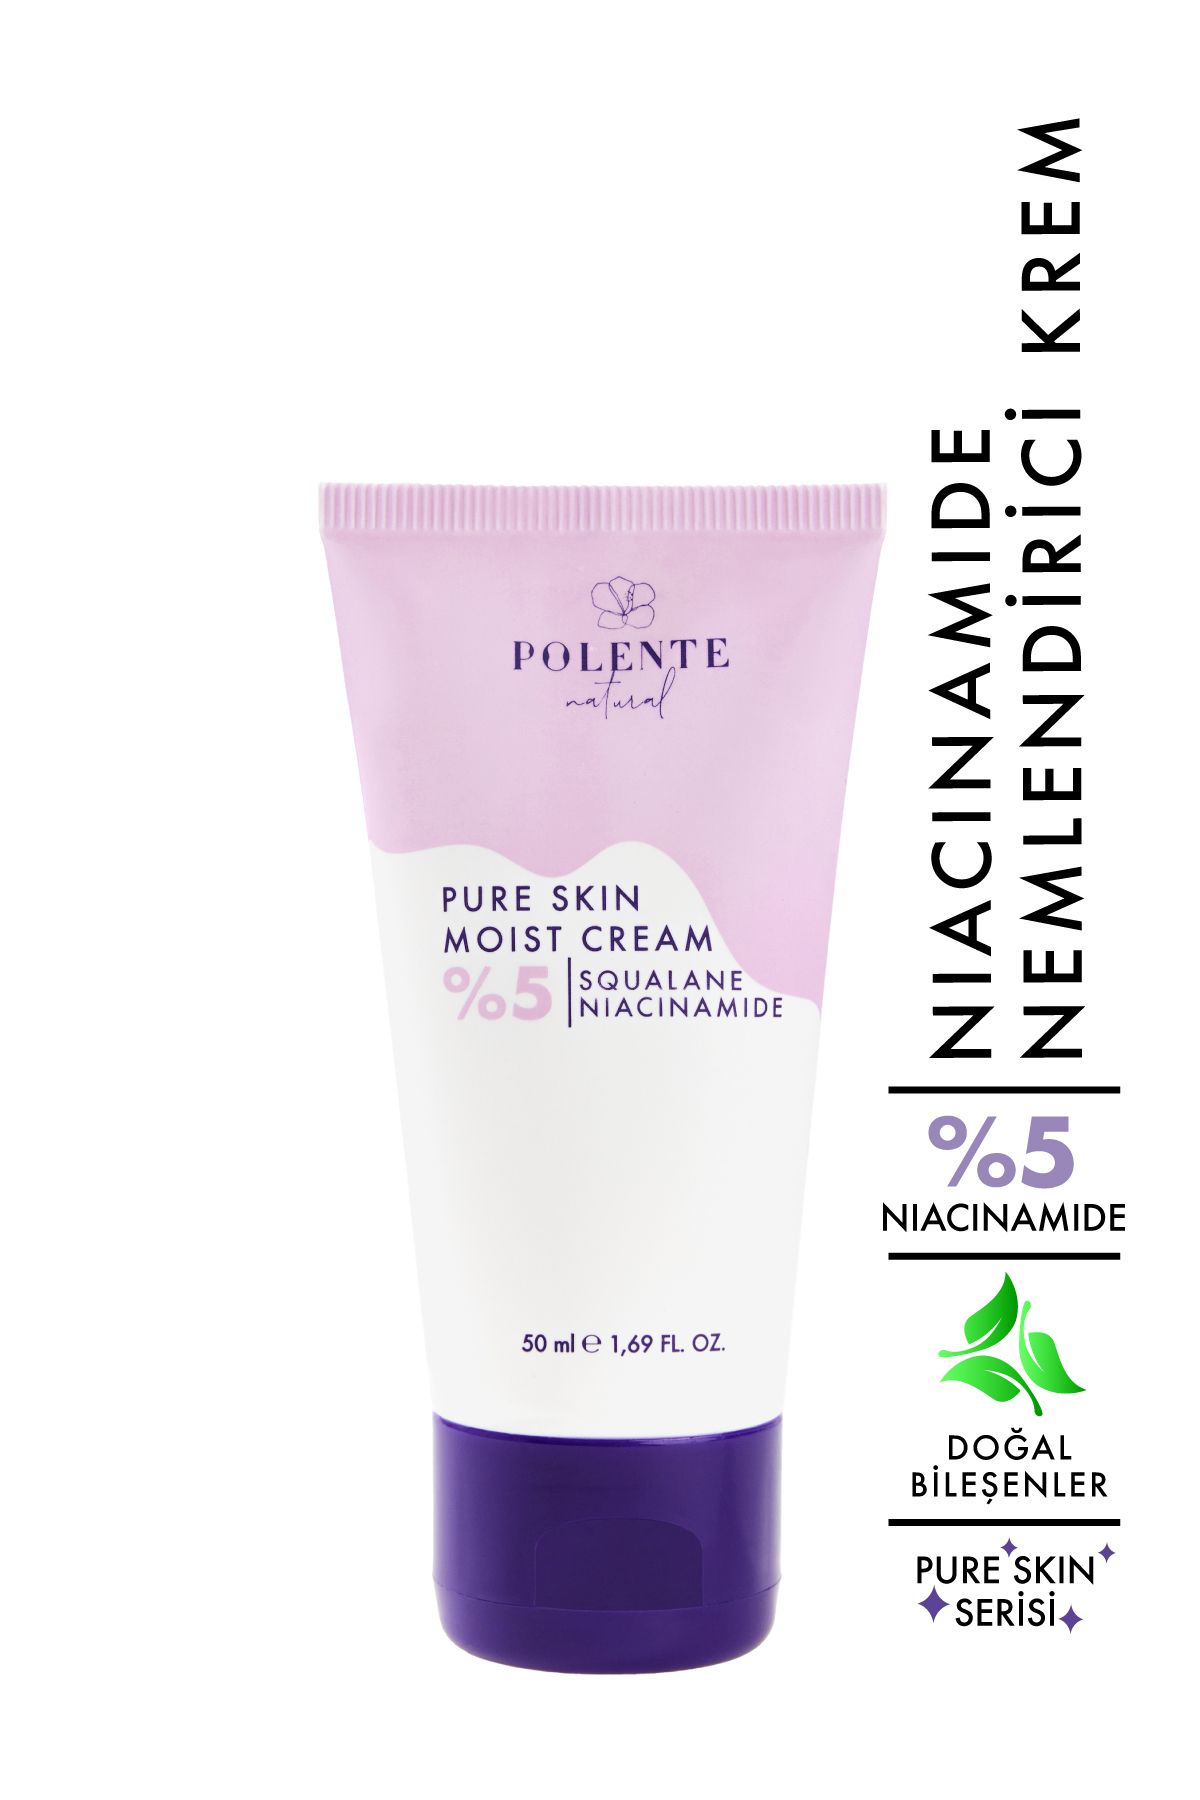 Polente Natural Pure Skın Moıst Cream - %5 Niacinamide Içeren Nemlendirici Krem